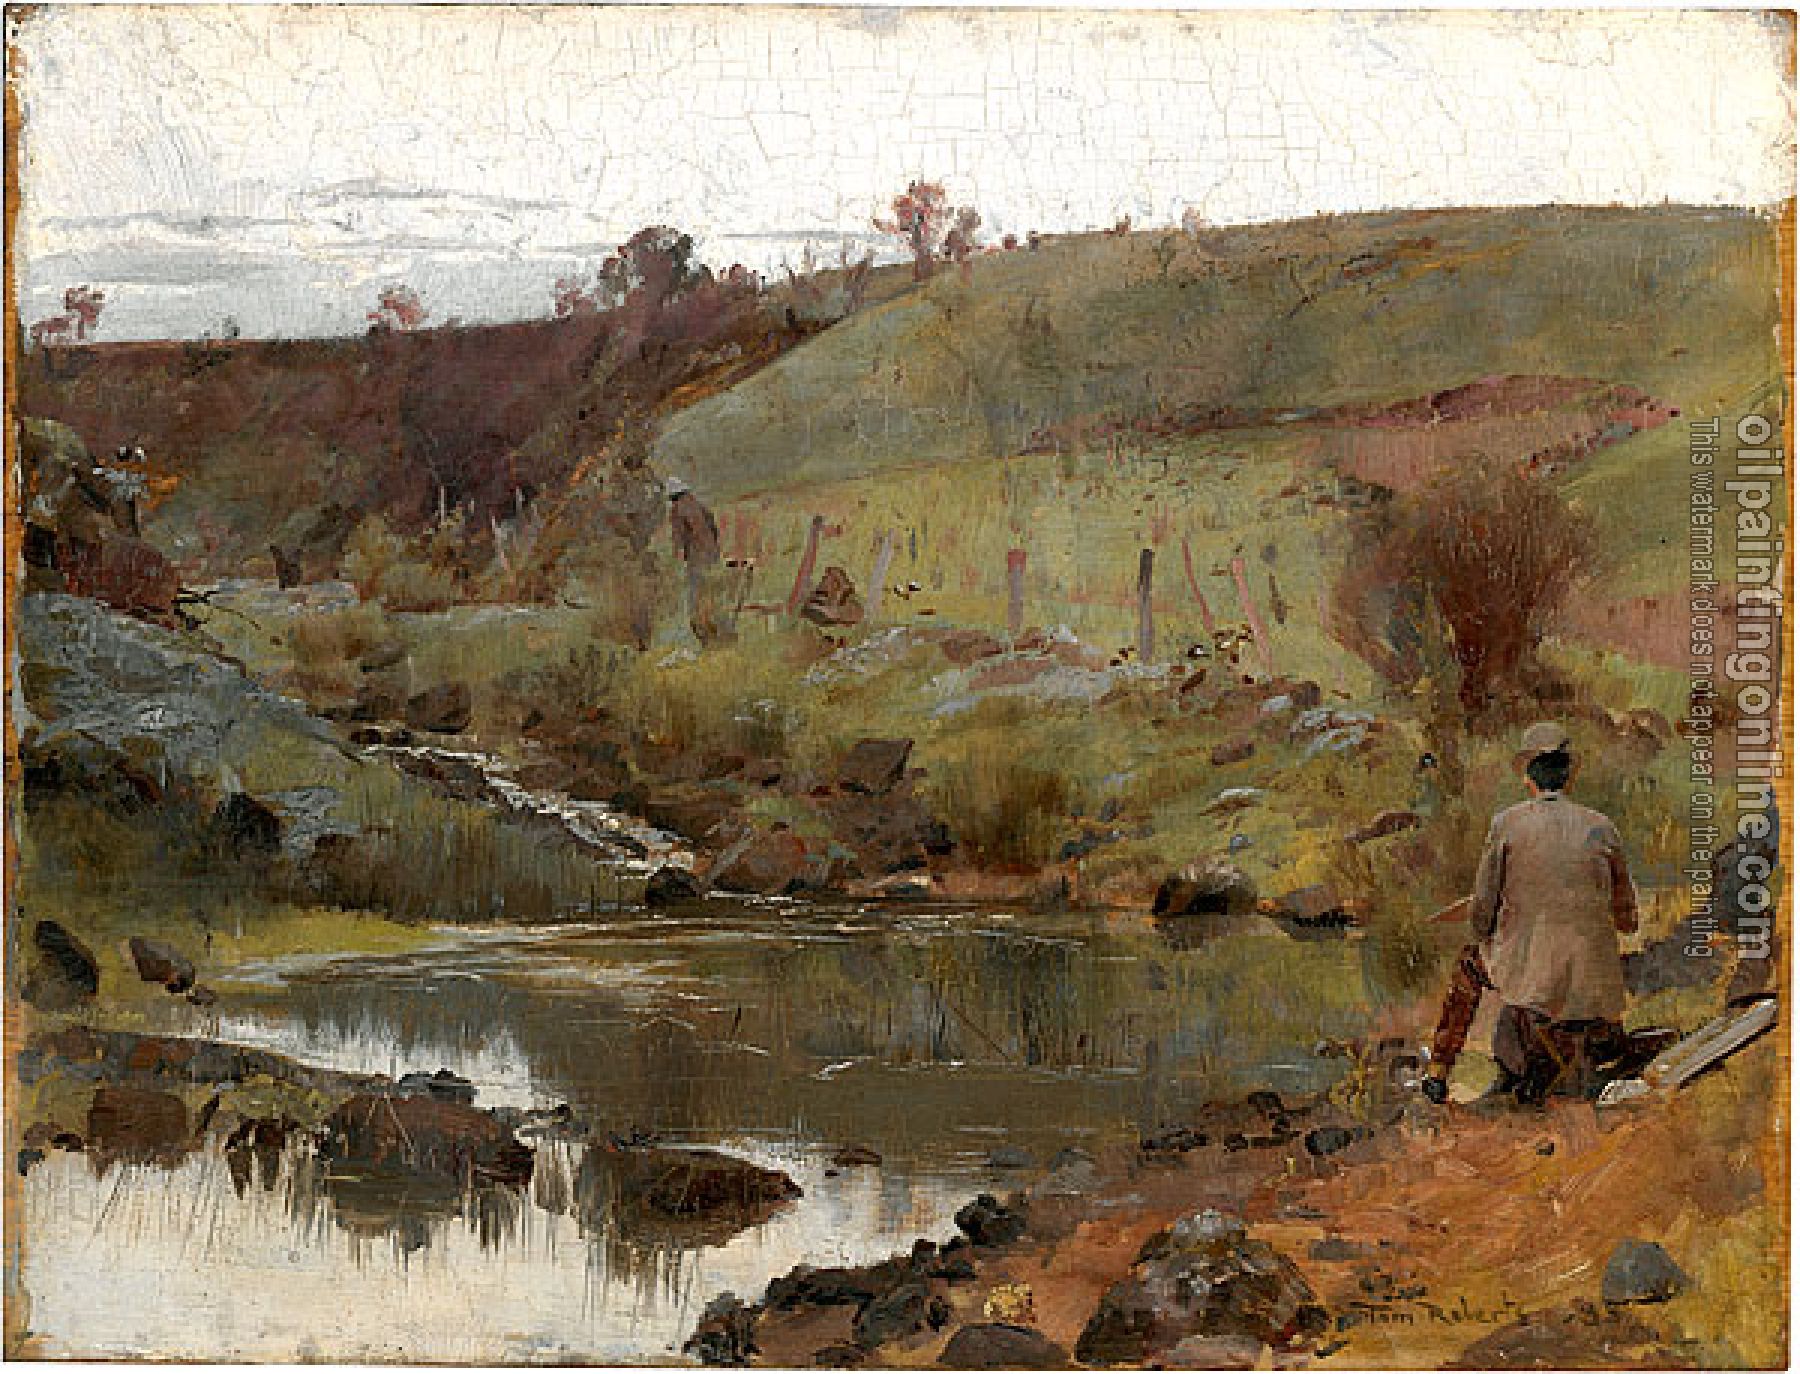 Roberts, Tom - A quiet day on Darebin Creek